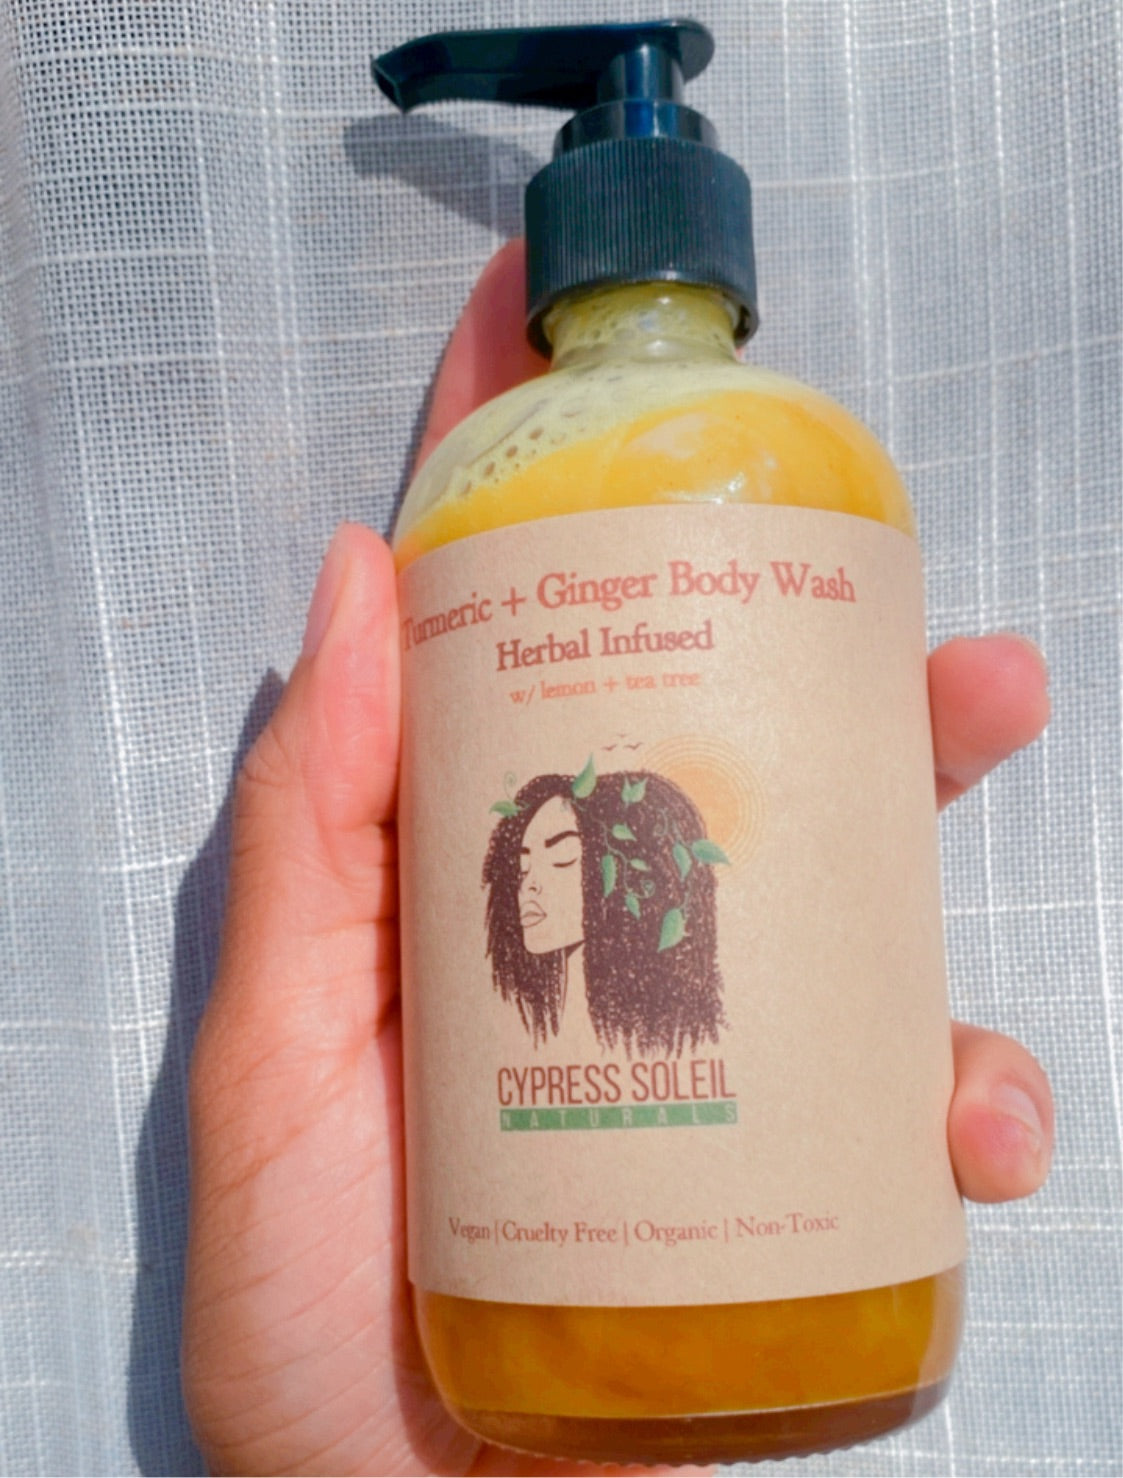 Turmeric + Ginger Body Wash - Herbal Infused